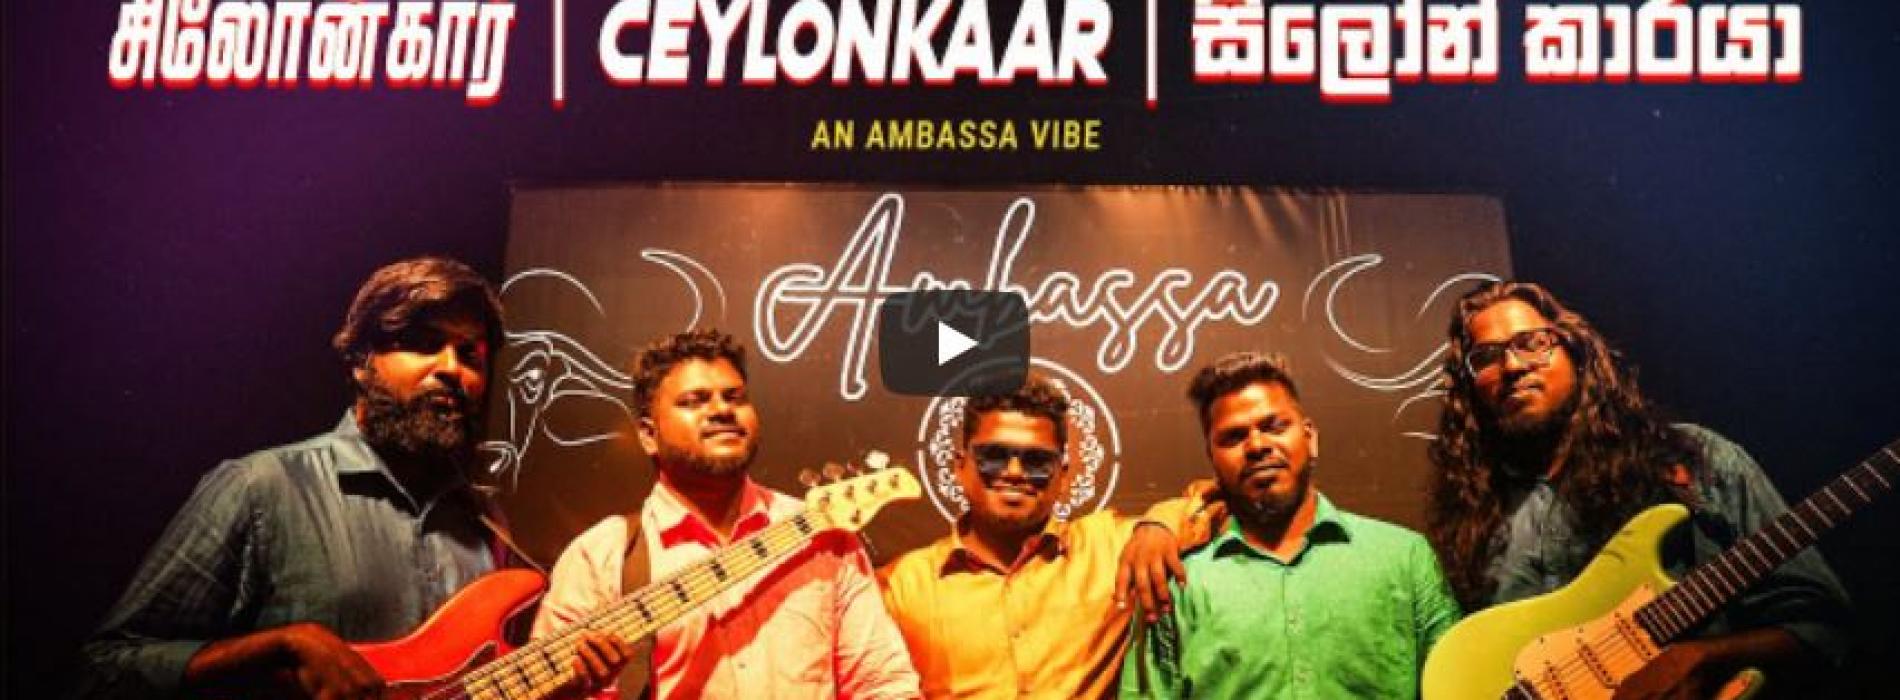 New Music : Ceylonkaar Music Video | சிலோன்கார் | සිලෝන් කාරයා | Arivu & The AMBASSA Band